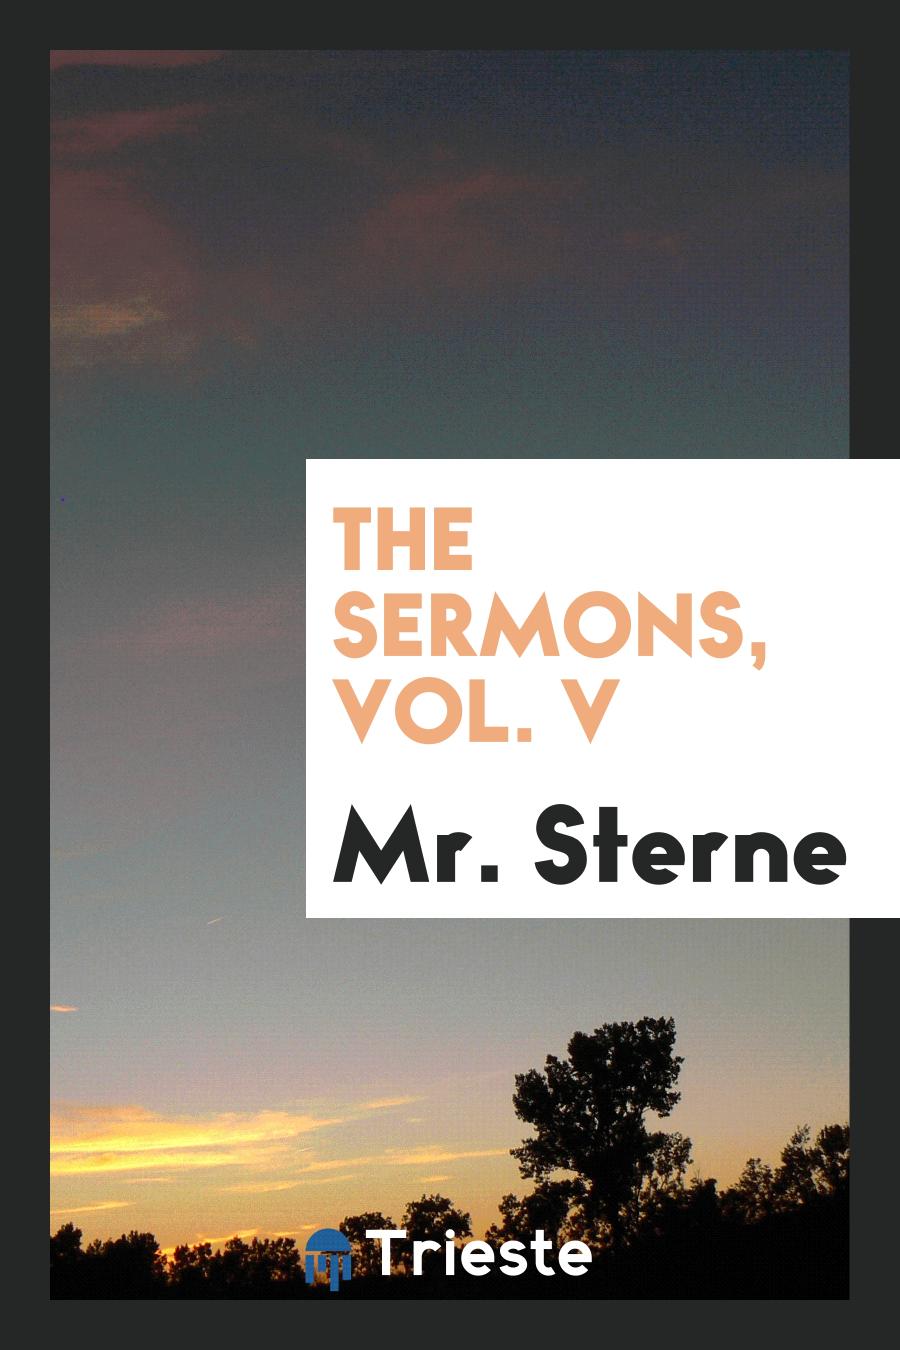 The sermons, Vol. V